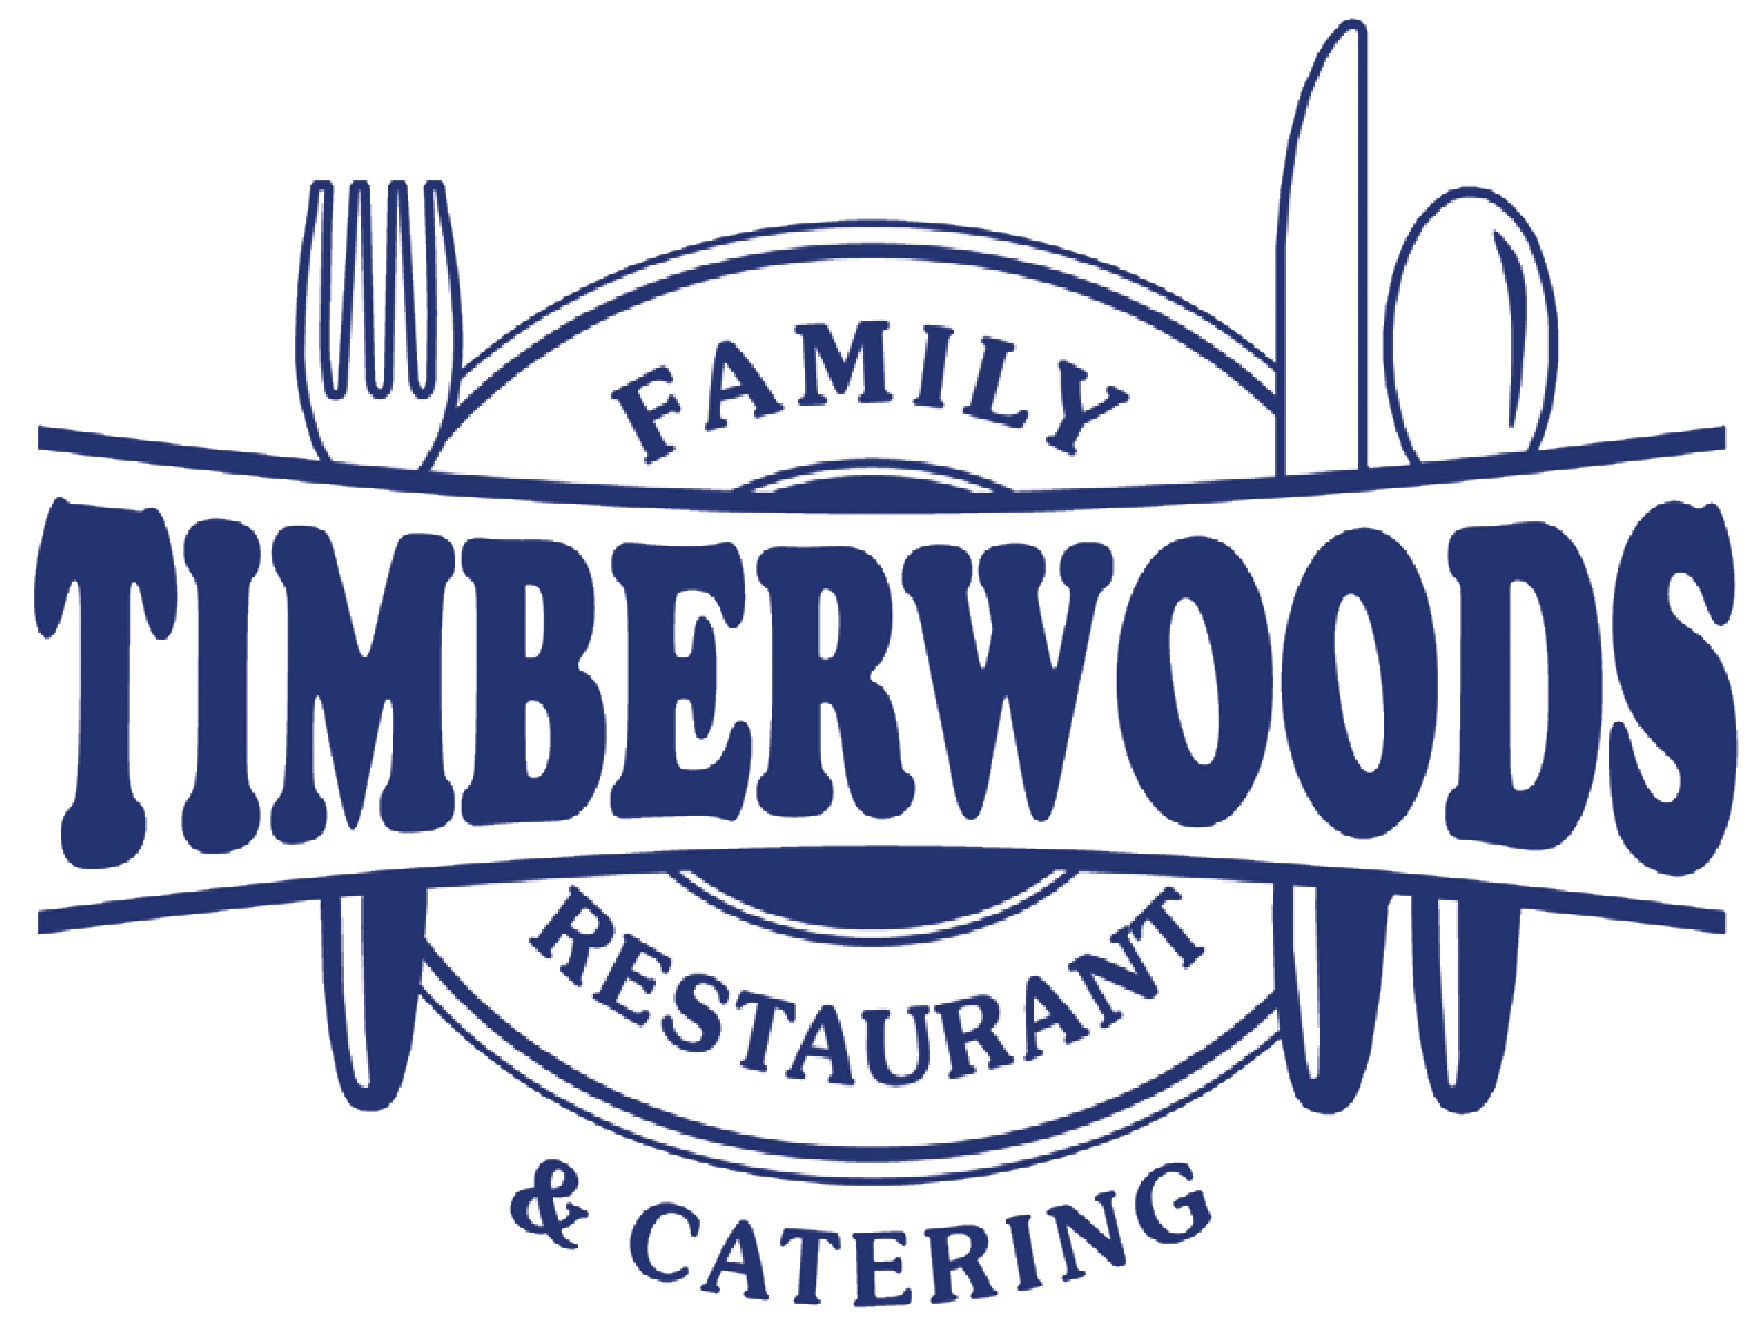 Timberwoods Family Restaurant